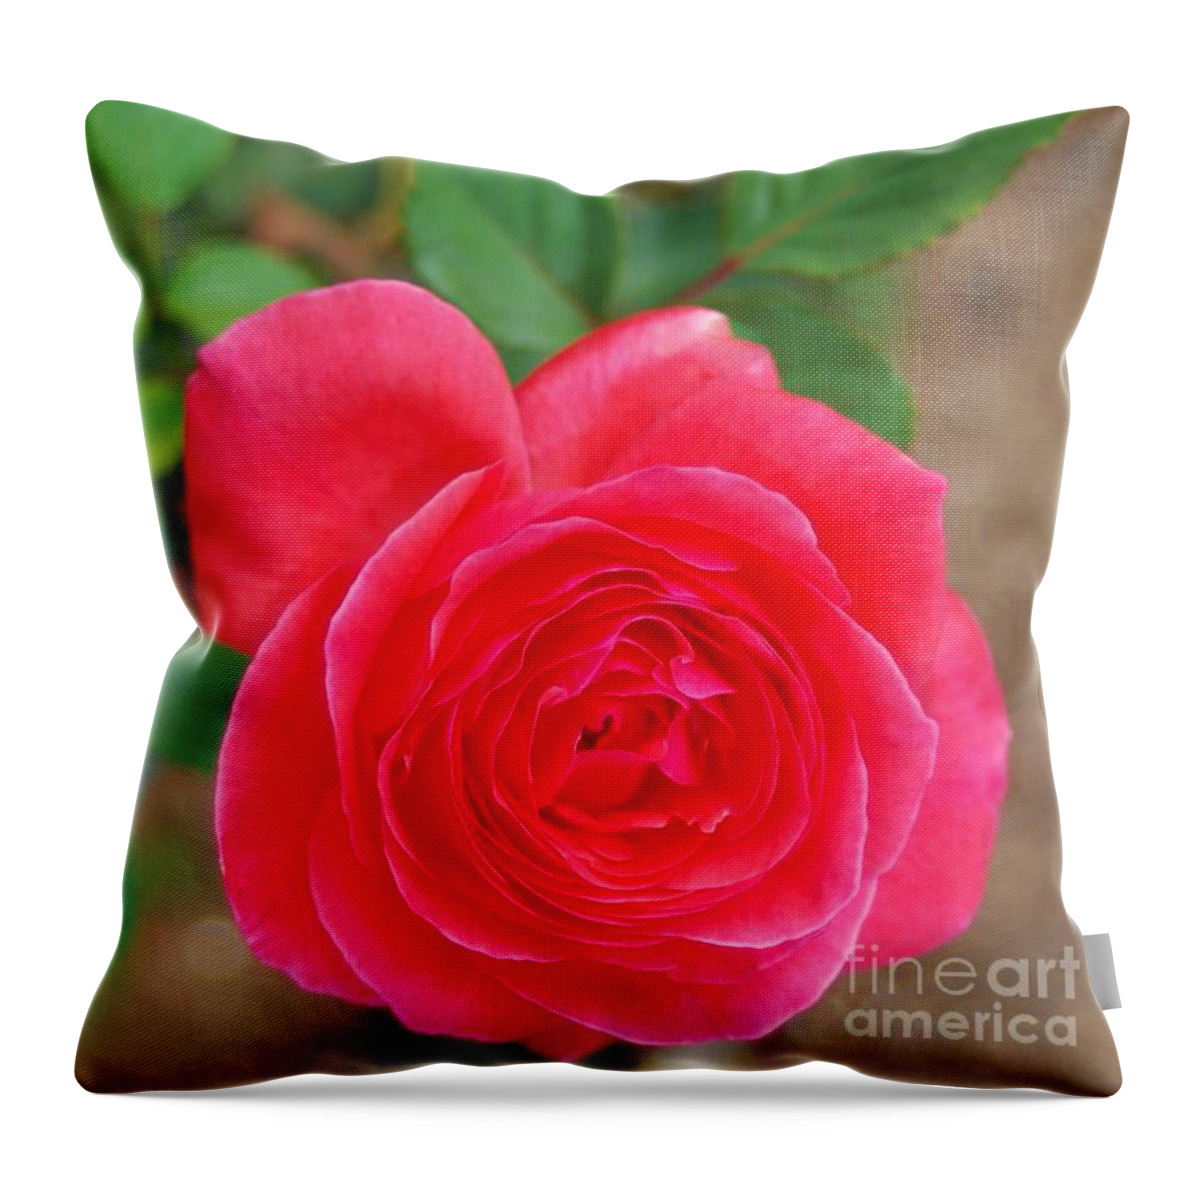 Garden Rose Throw Pillow featuring the photograph NaturaL GarDeN BeauTY by Angela J Wright